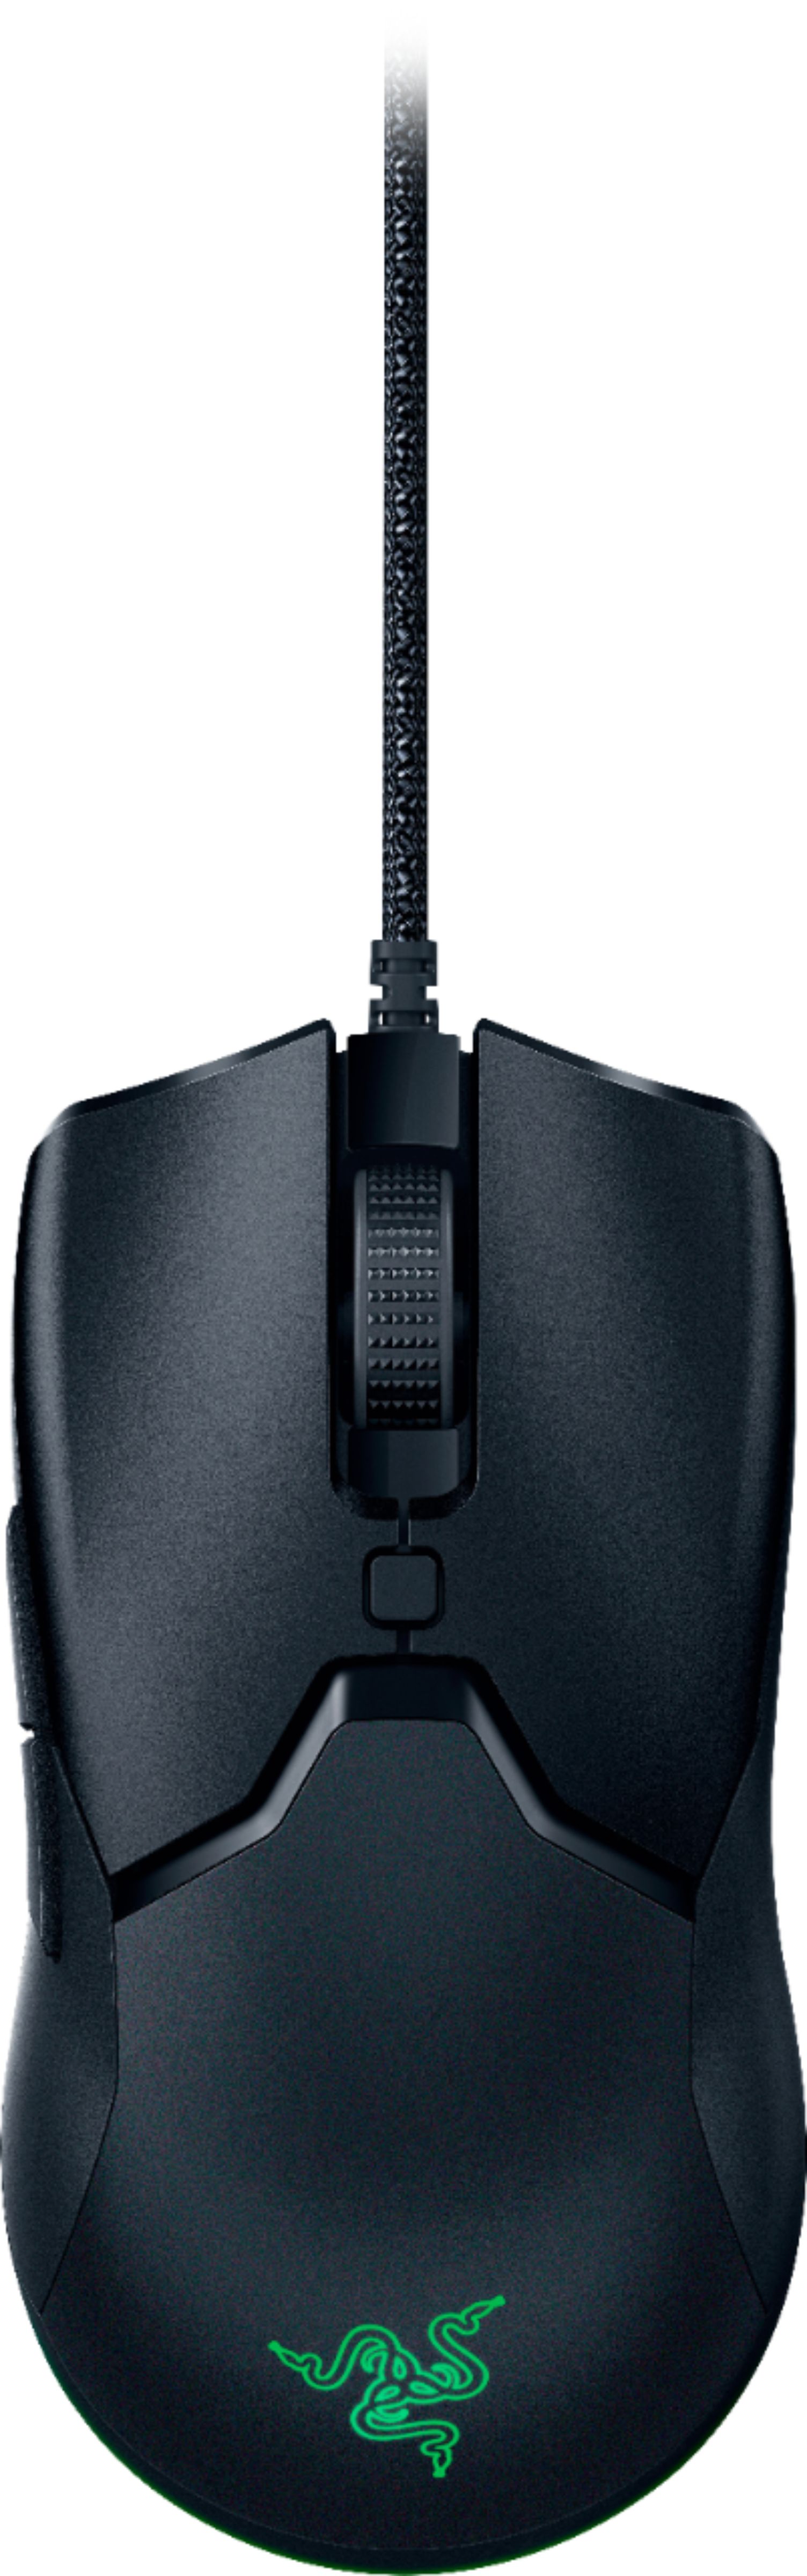 Razer Viper Mini Wired Optical Gaming Mouse With Chroma Rgb Lighting Black Rz01 R3u1 Best Buy